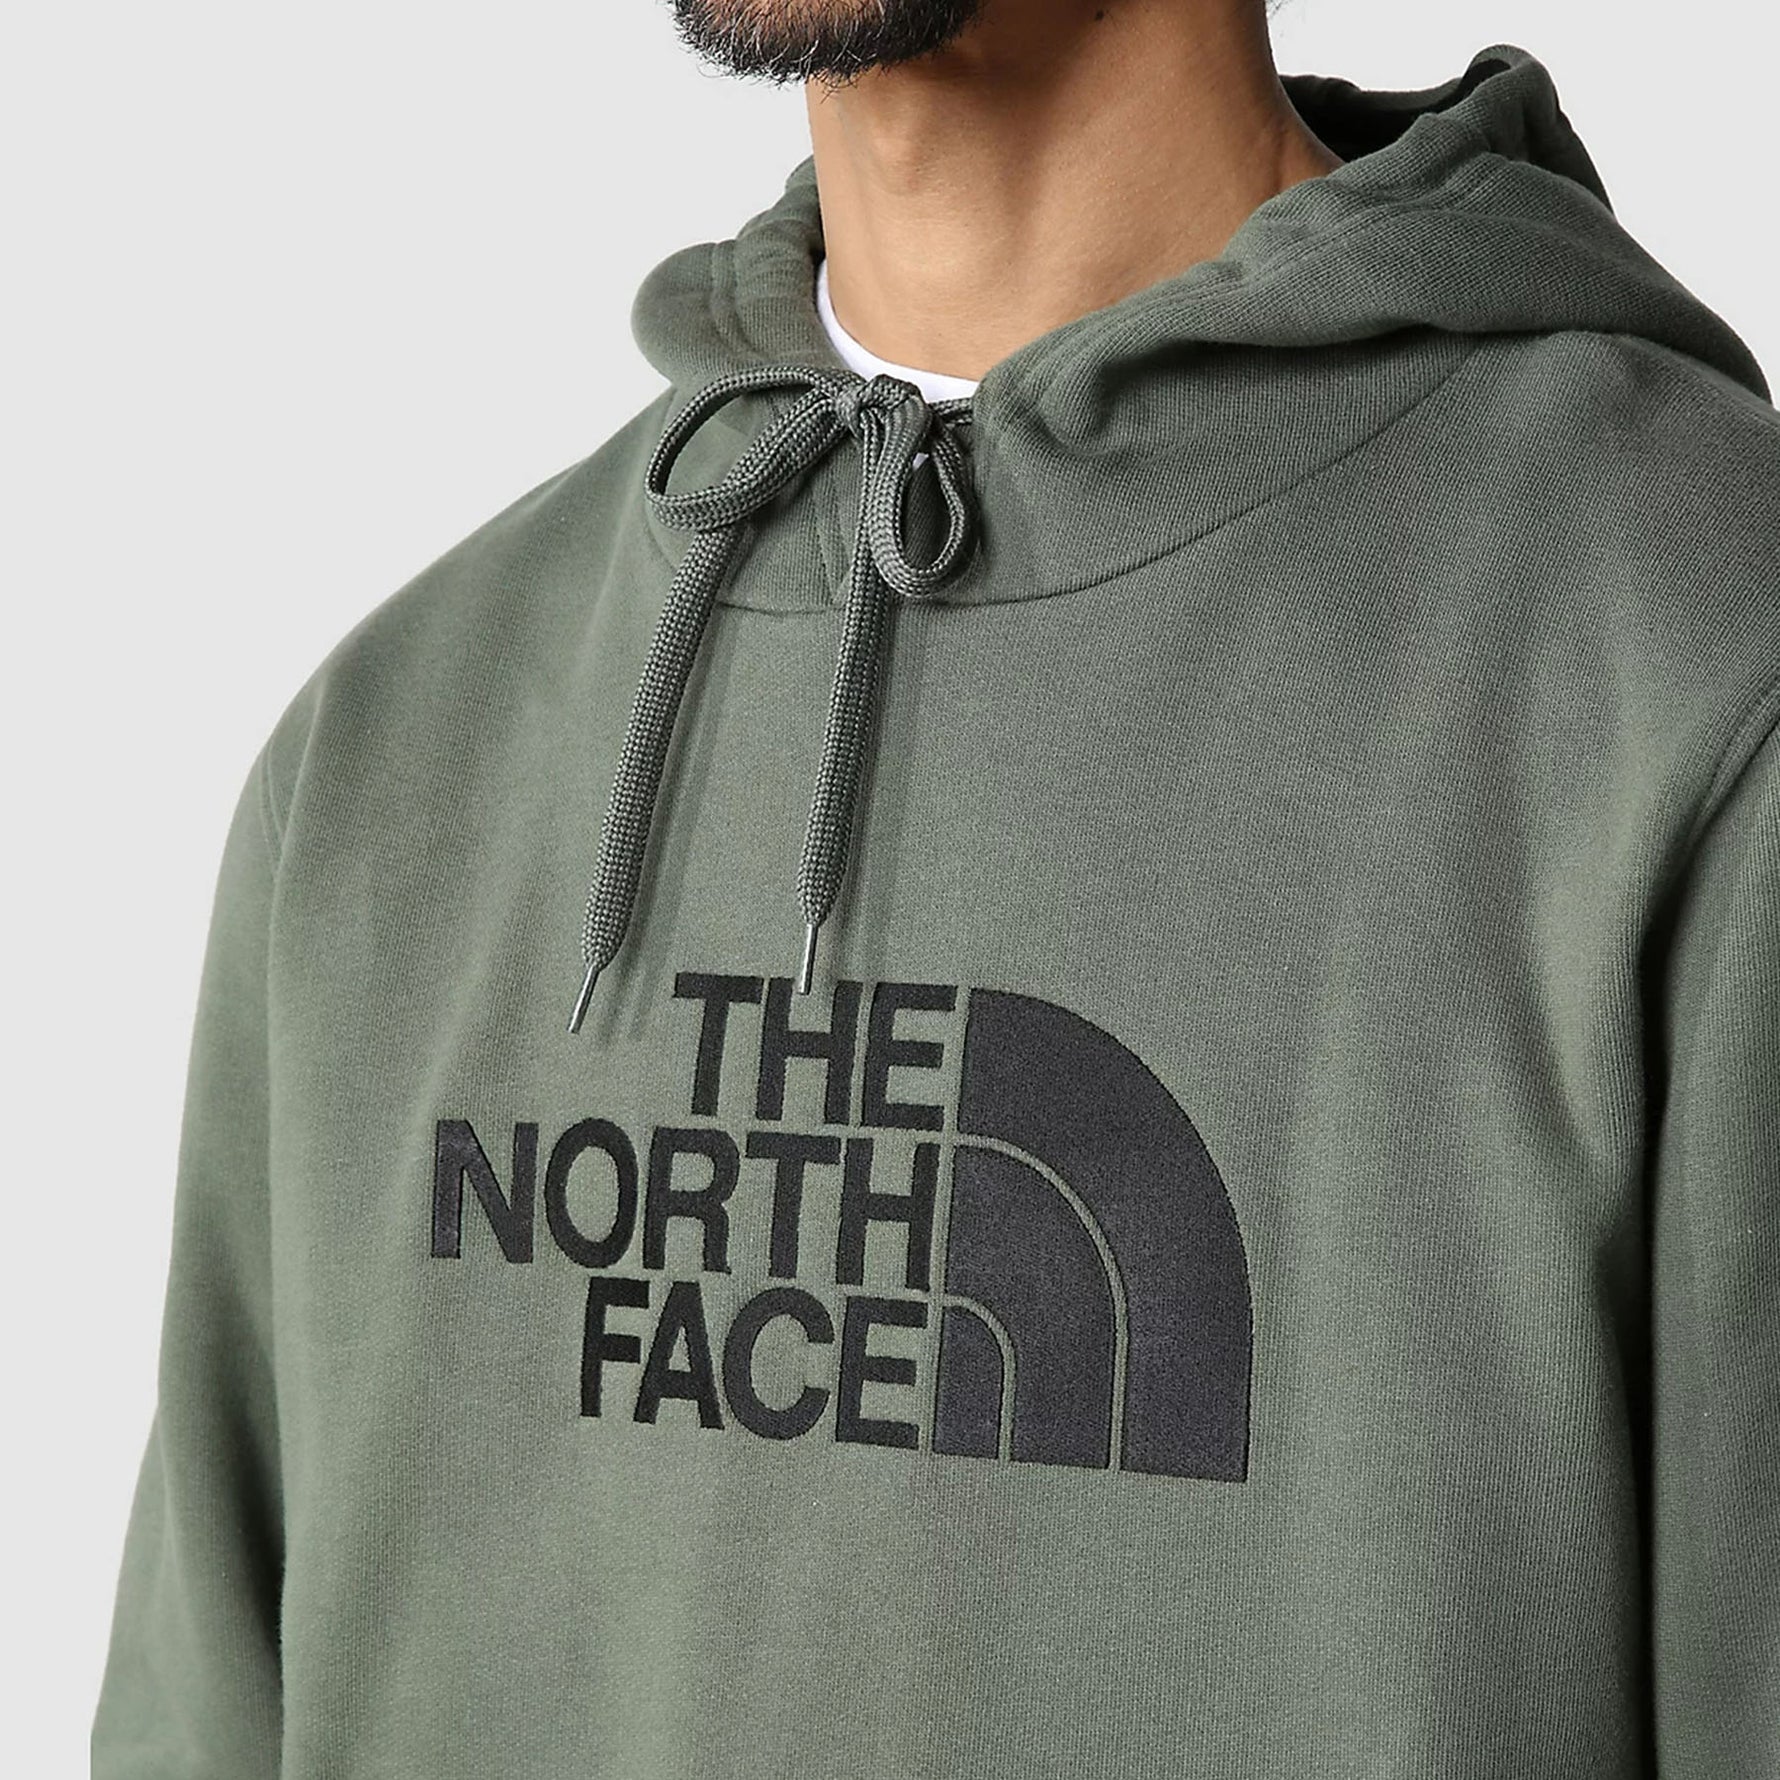 The North Face Men's Drew Peak Pullover Hoodie 